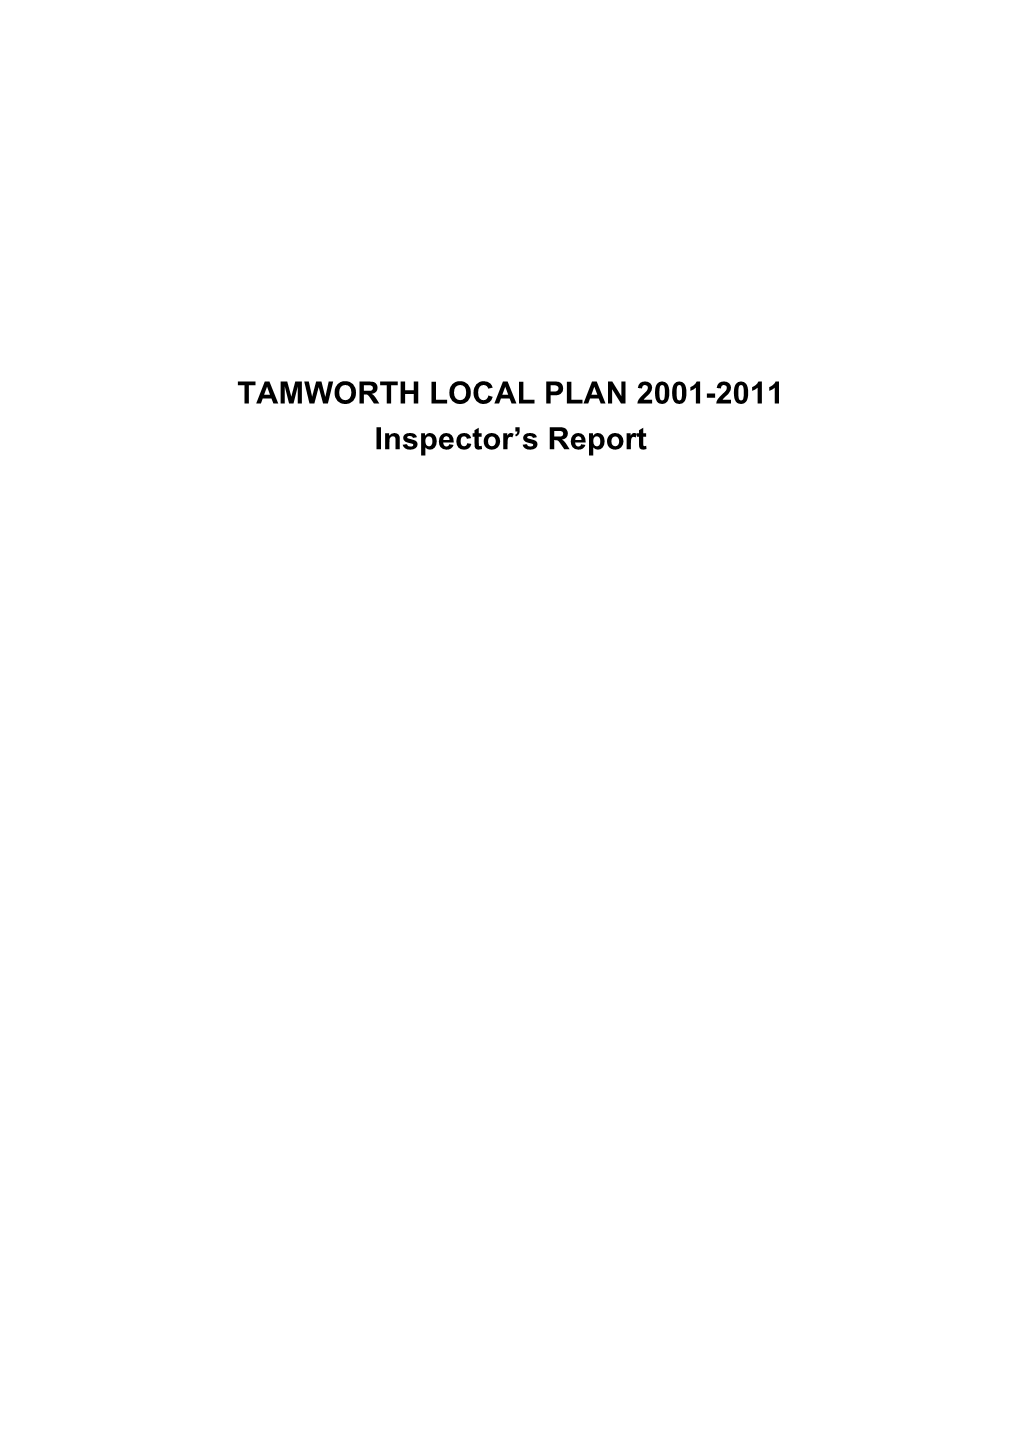 TAMWORTH LOCAL PLAN 2001-2011 Inspector's Report